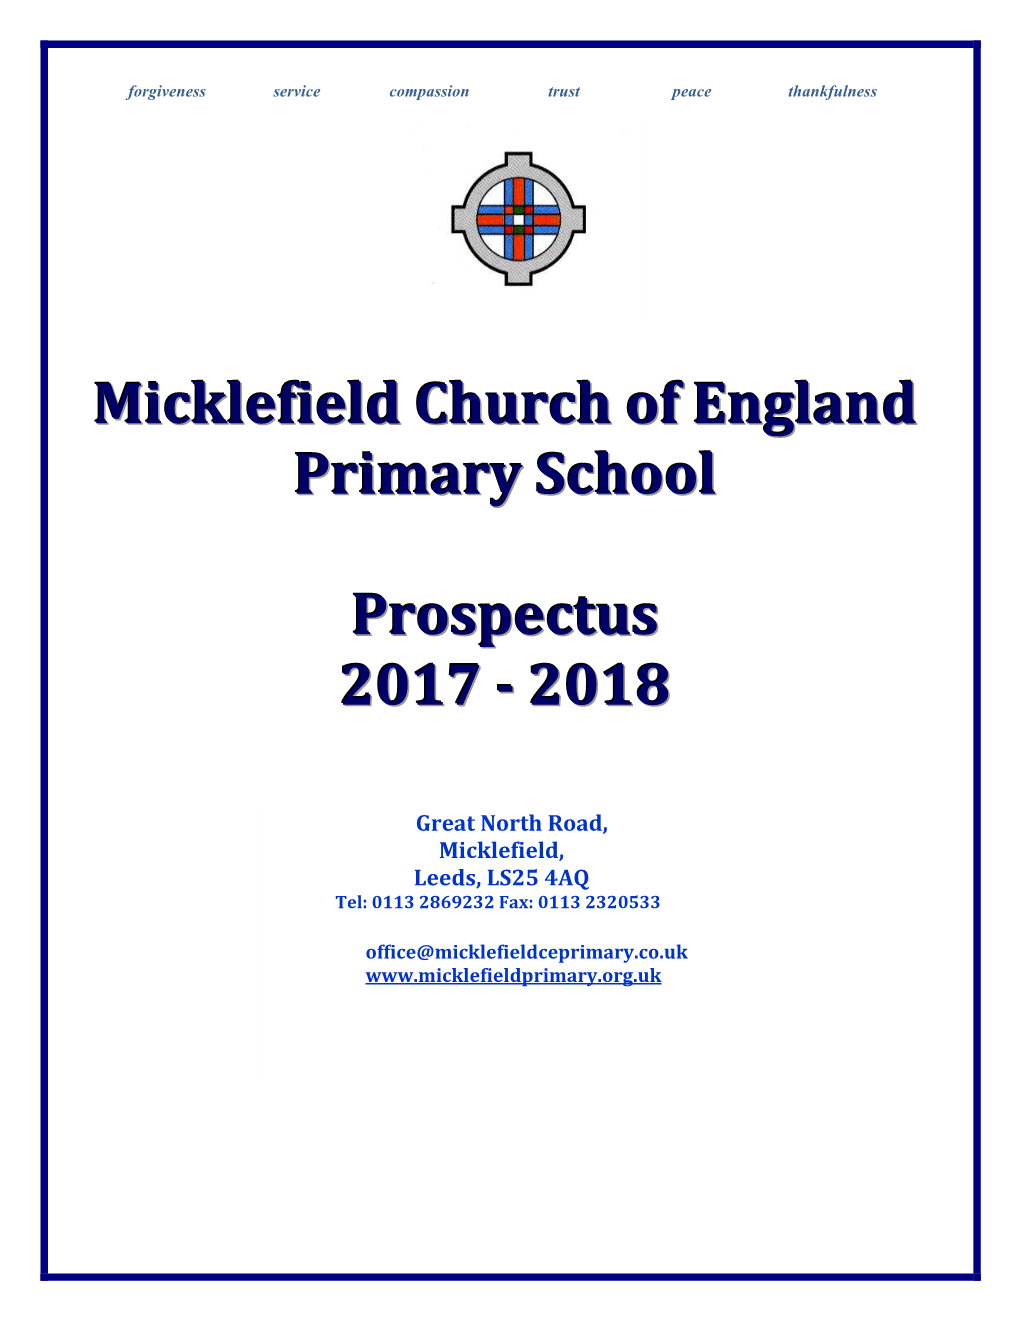 Micklefield Church of England Primary Schooll Prospectus 2017